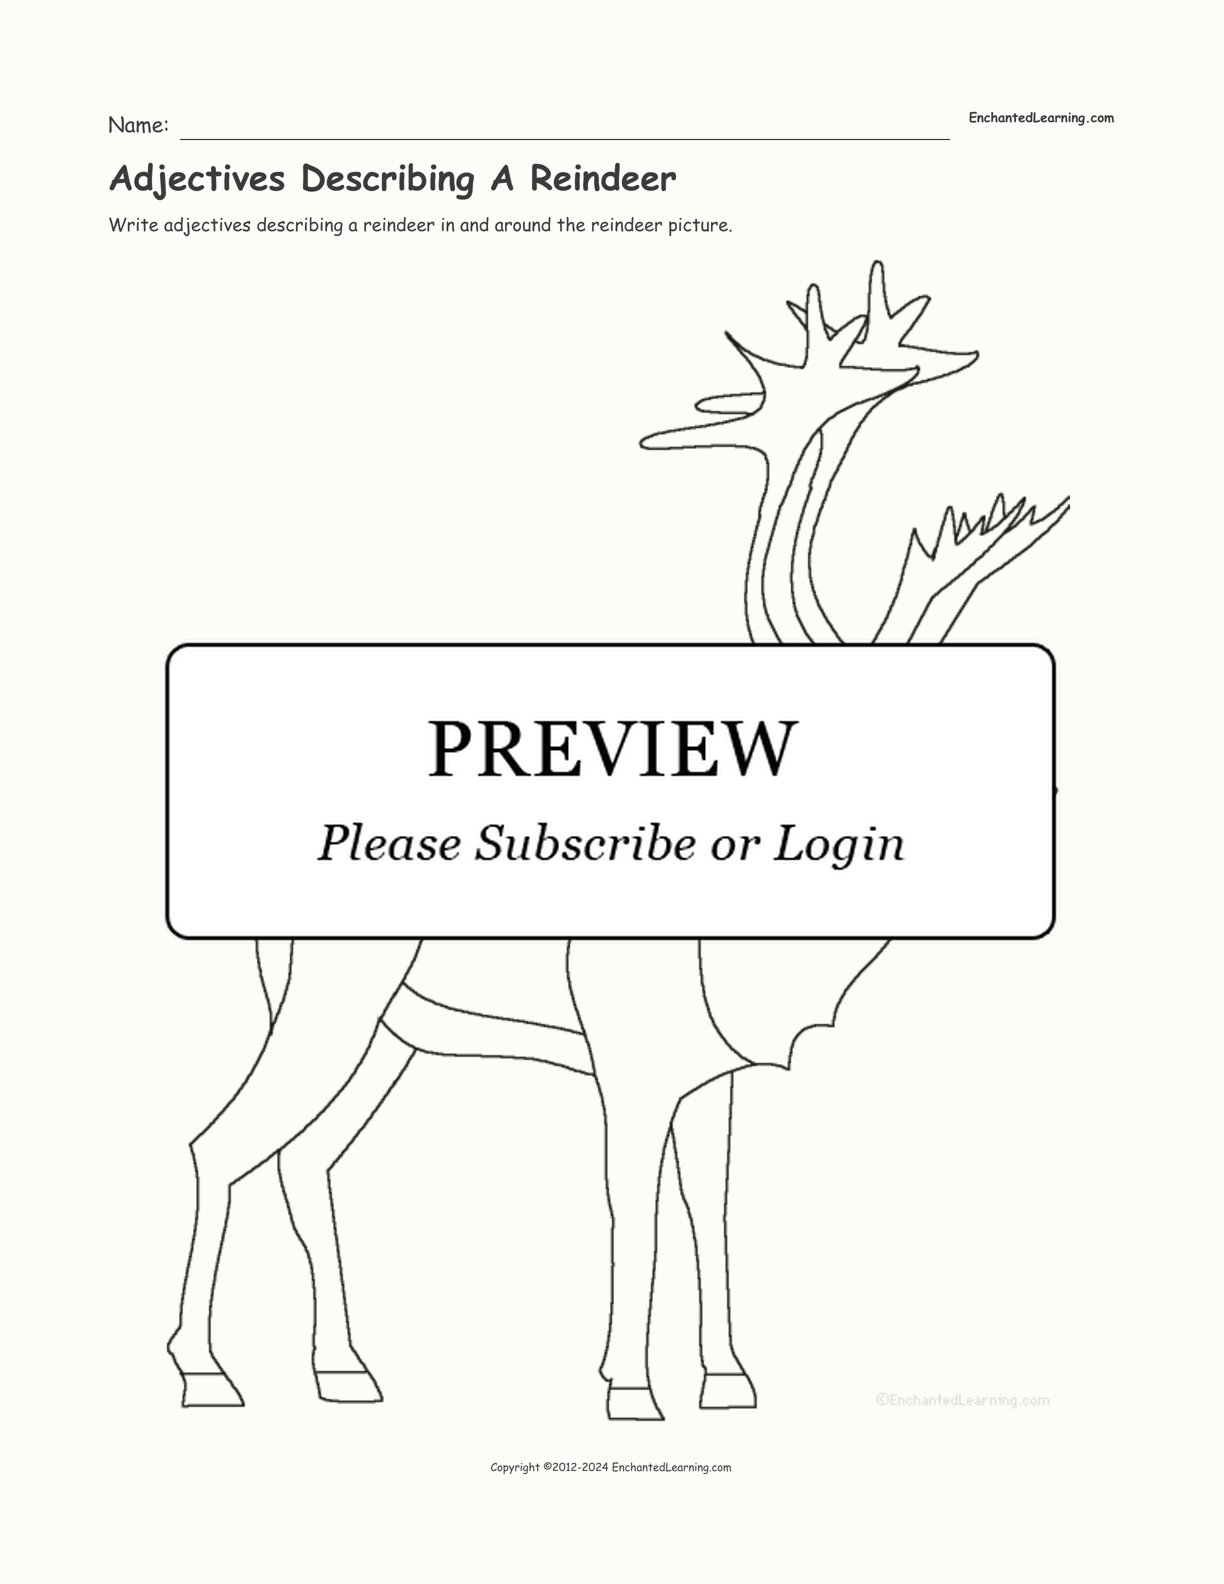 Adjectives Describing A Reindeer interactive worksheet page 1